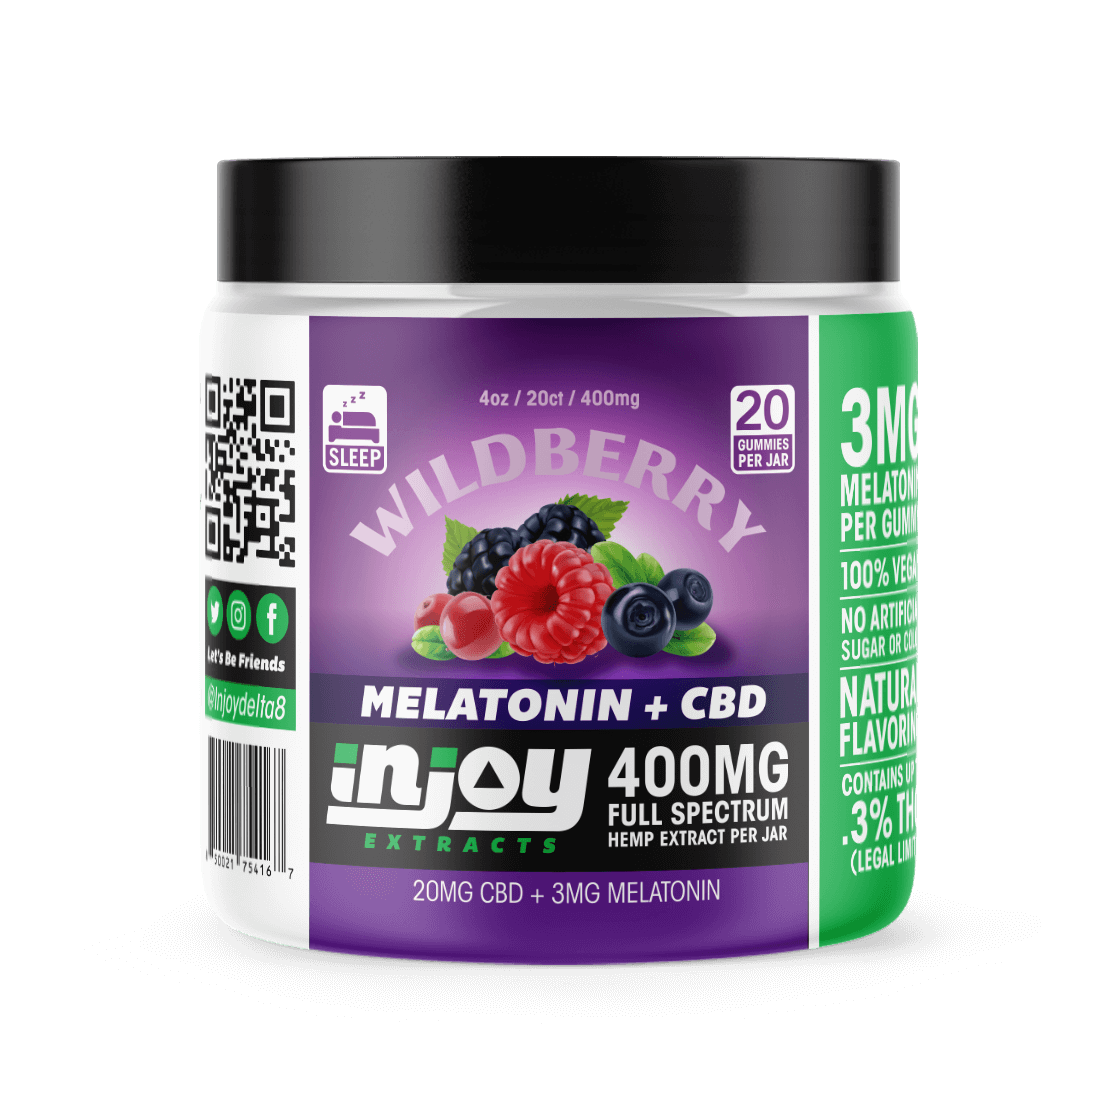 CBD gummies with melatonin for sleep - 400mg - Injoy extracts